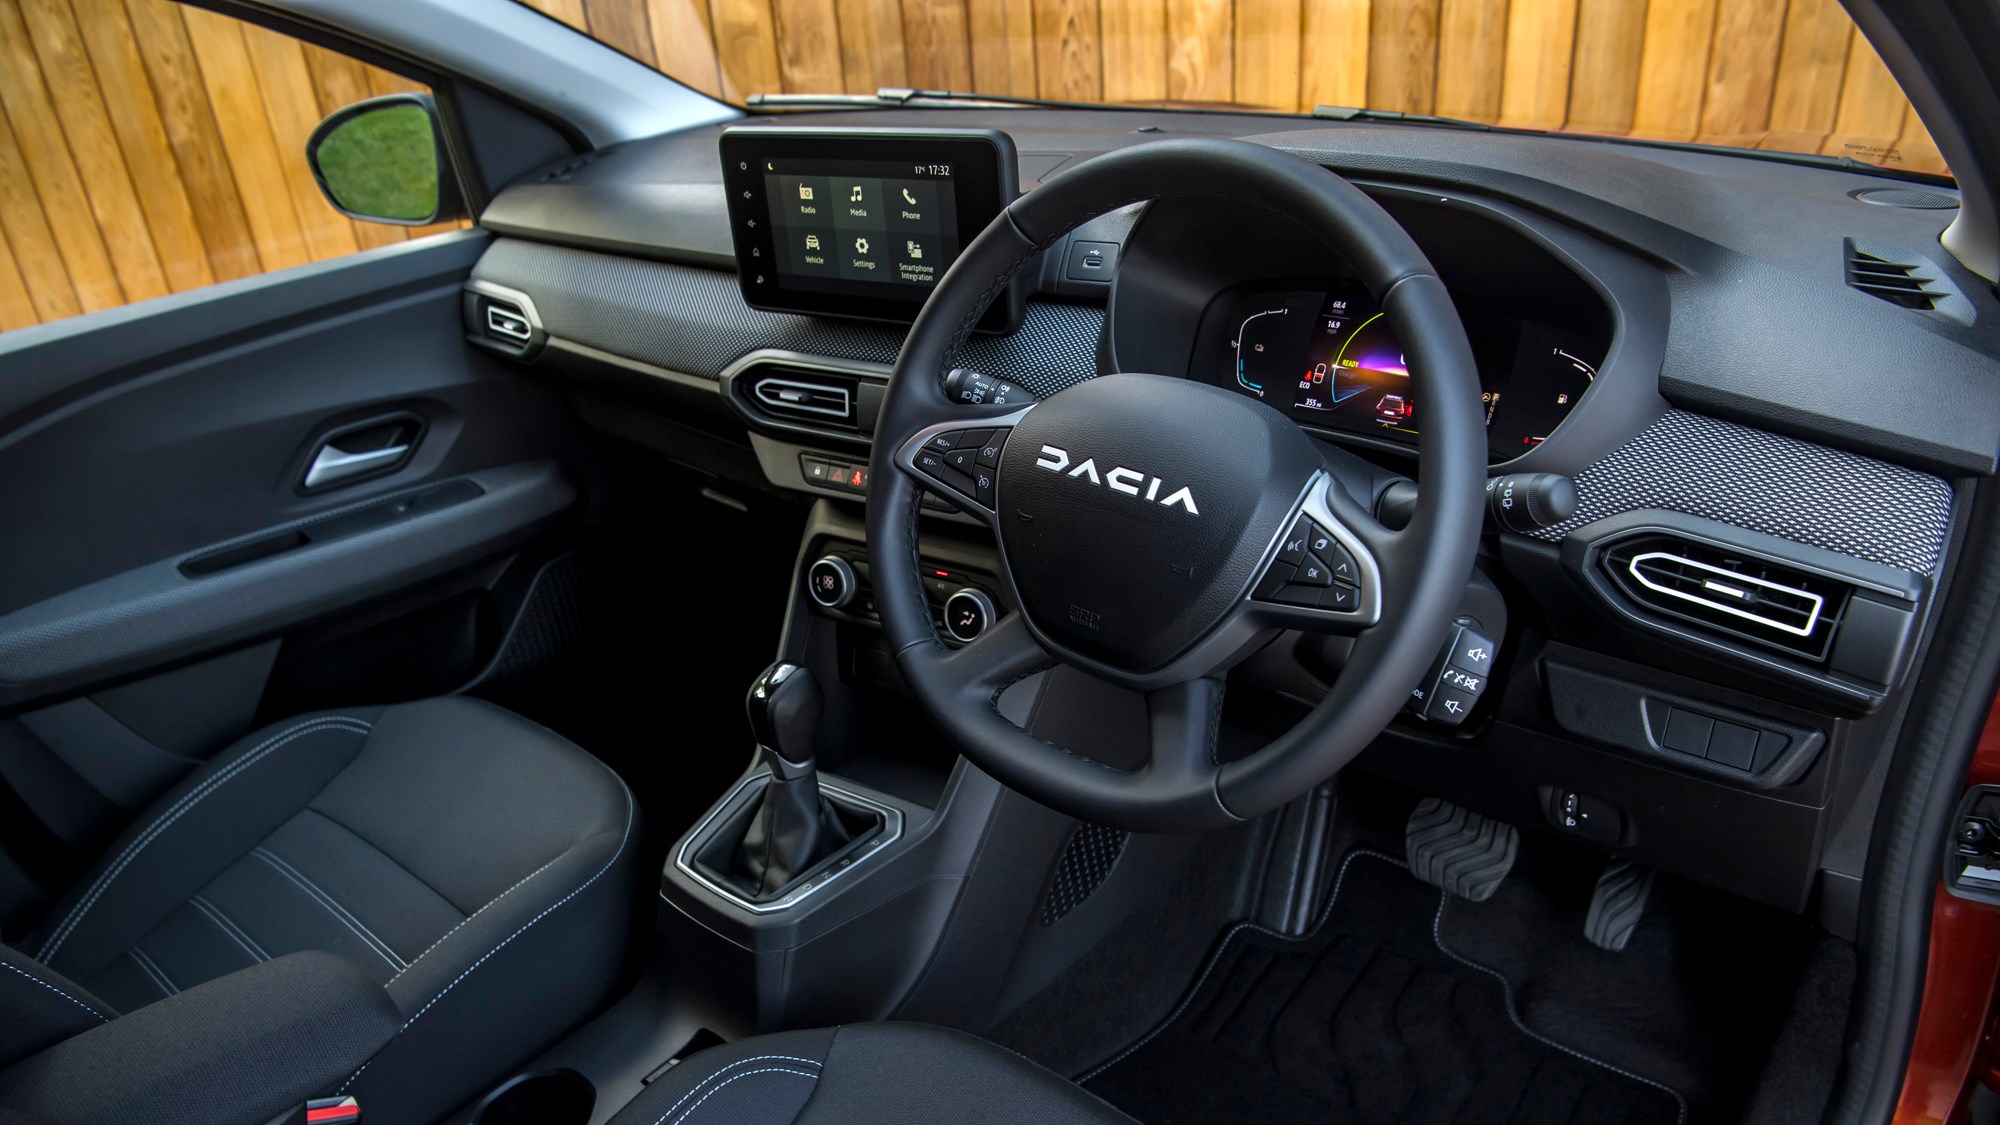 New Dacia Jogger Hybrid 140 2023 review